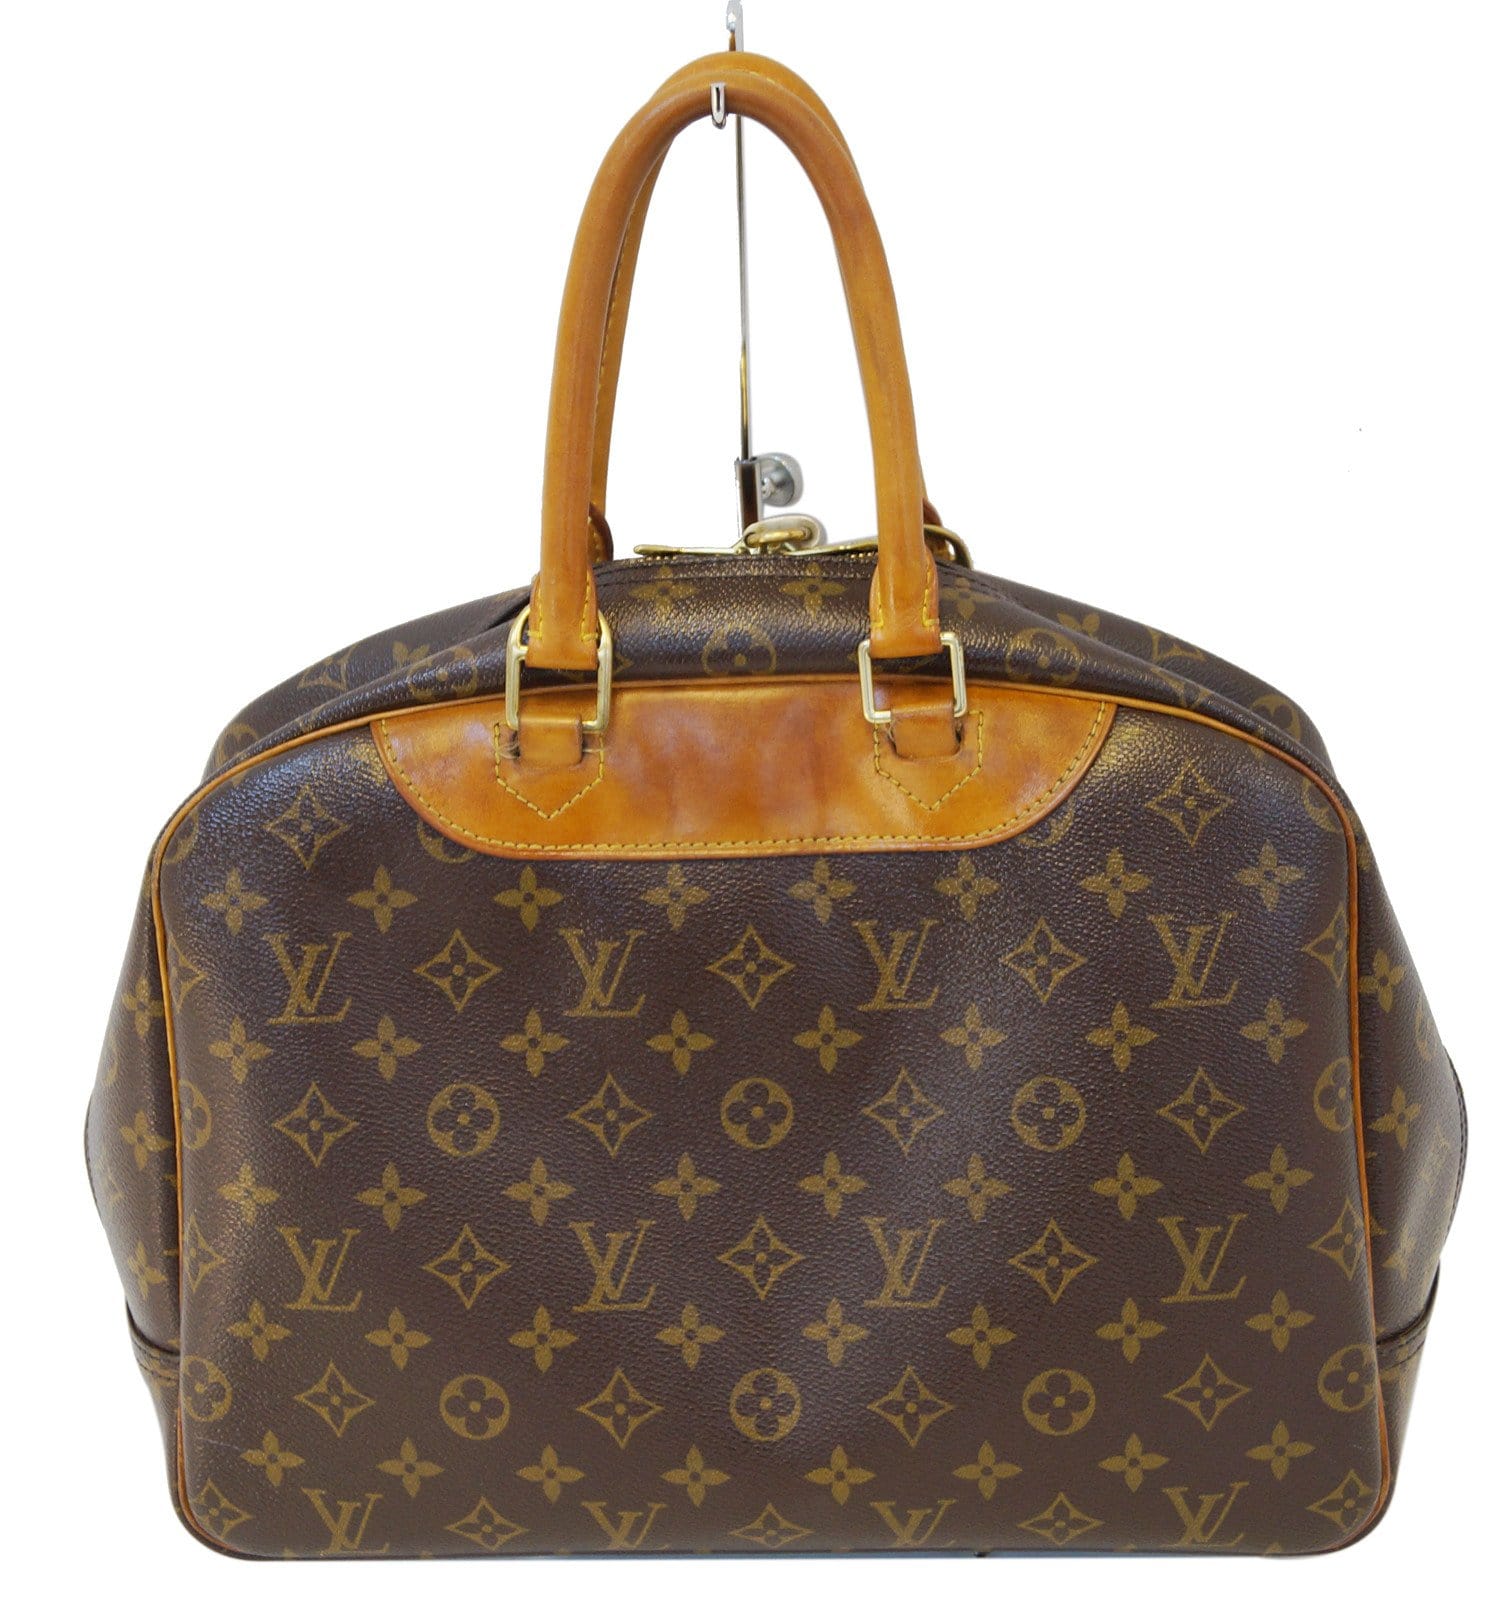 Jennifer S unboxing her Louis Vuitton Handbag 